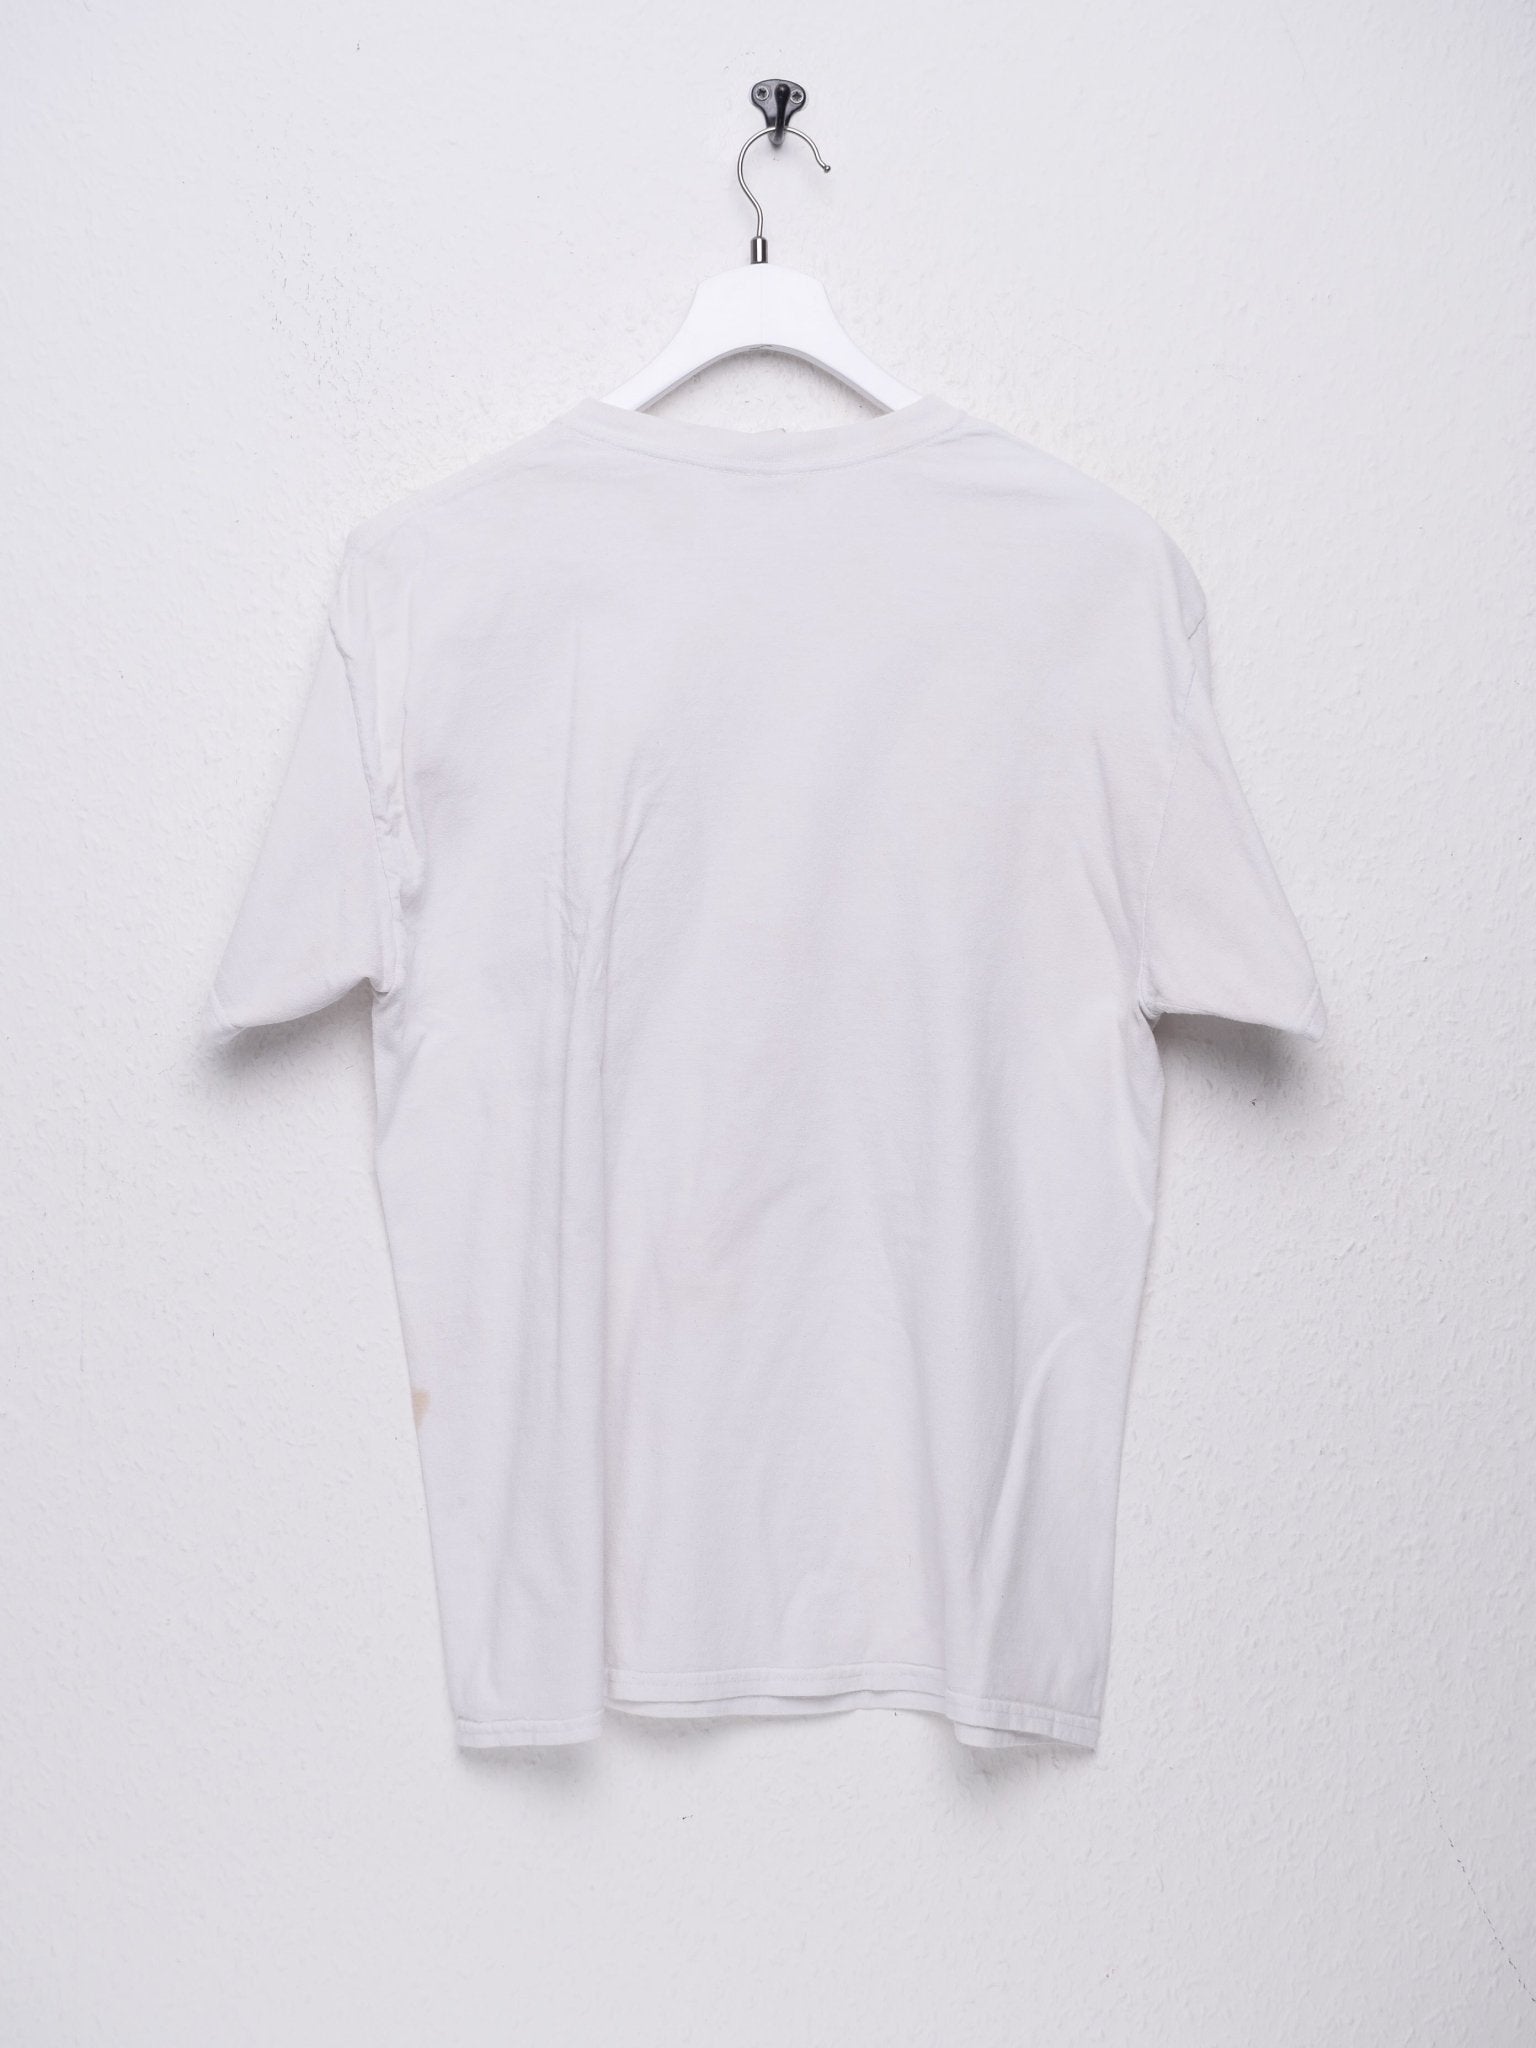 Champions printed Graphic white Shirt - Peeces